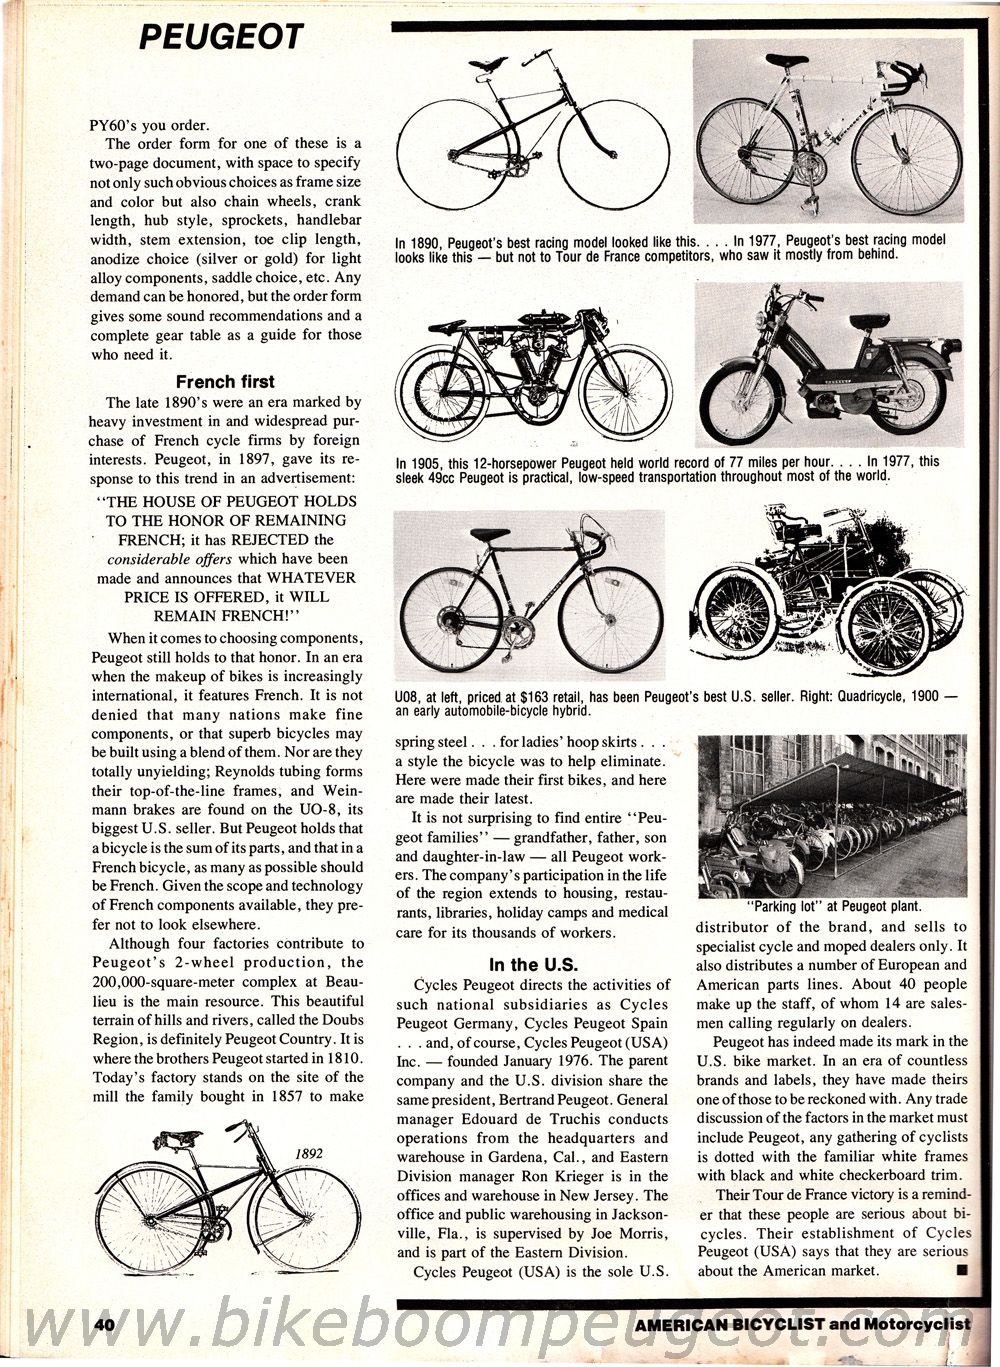 1977 Am Bicyclist Motorcyclist Sept Pg40.jpg